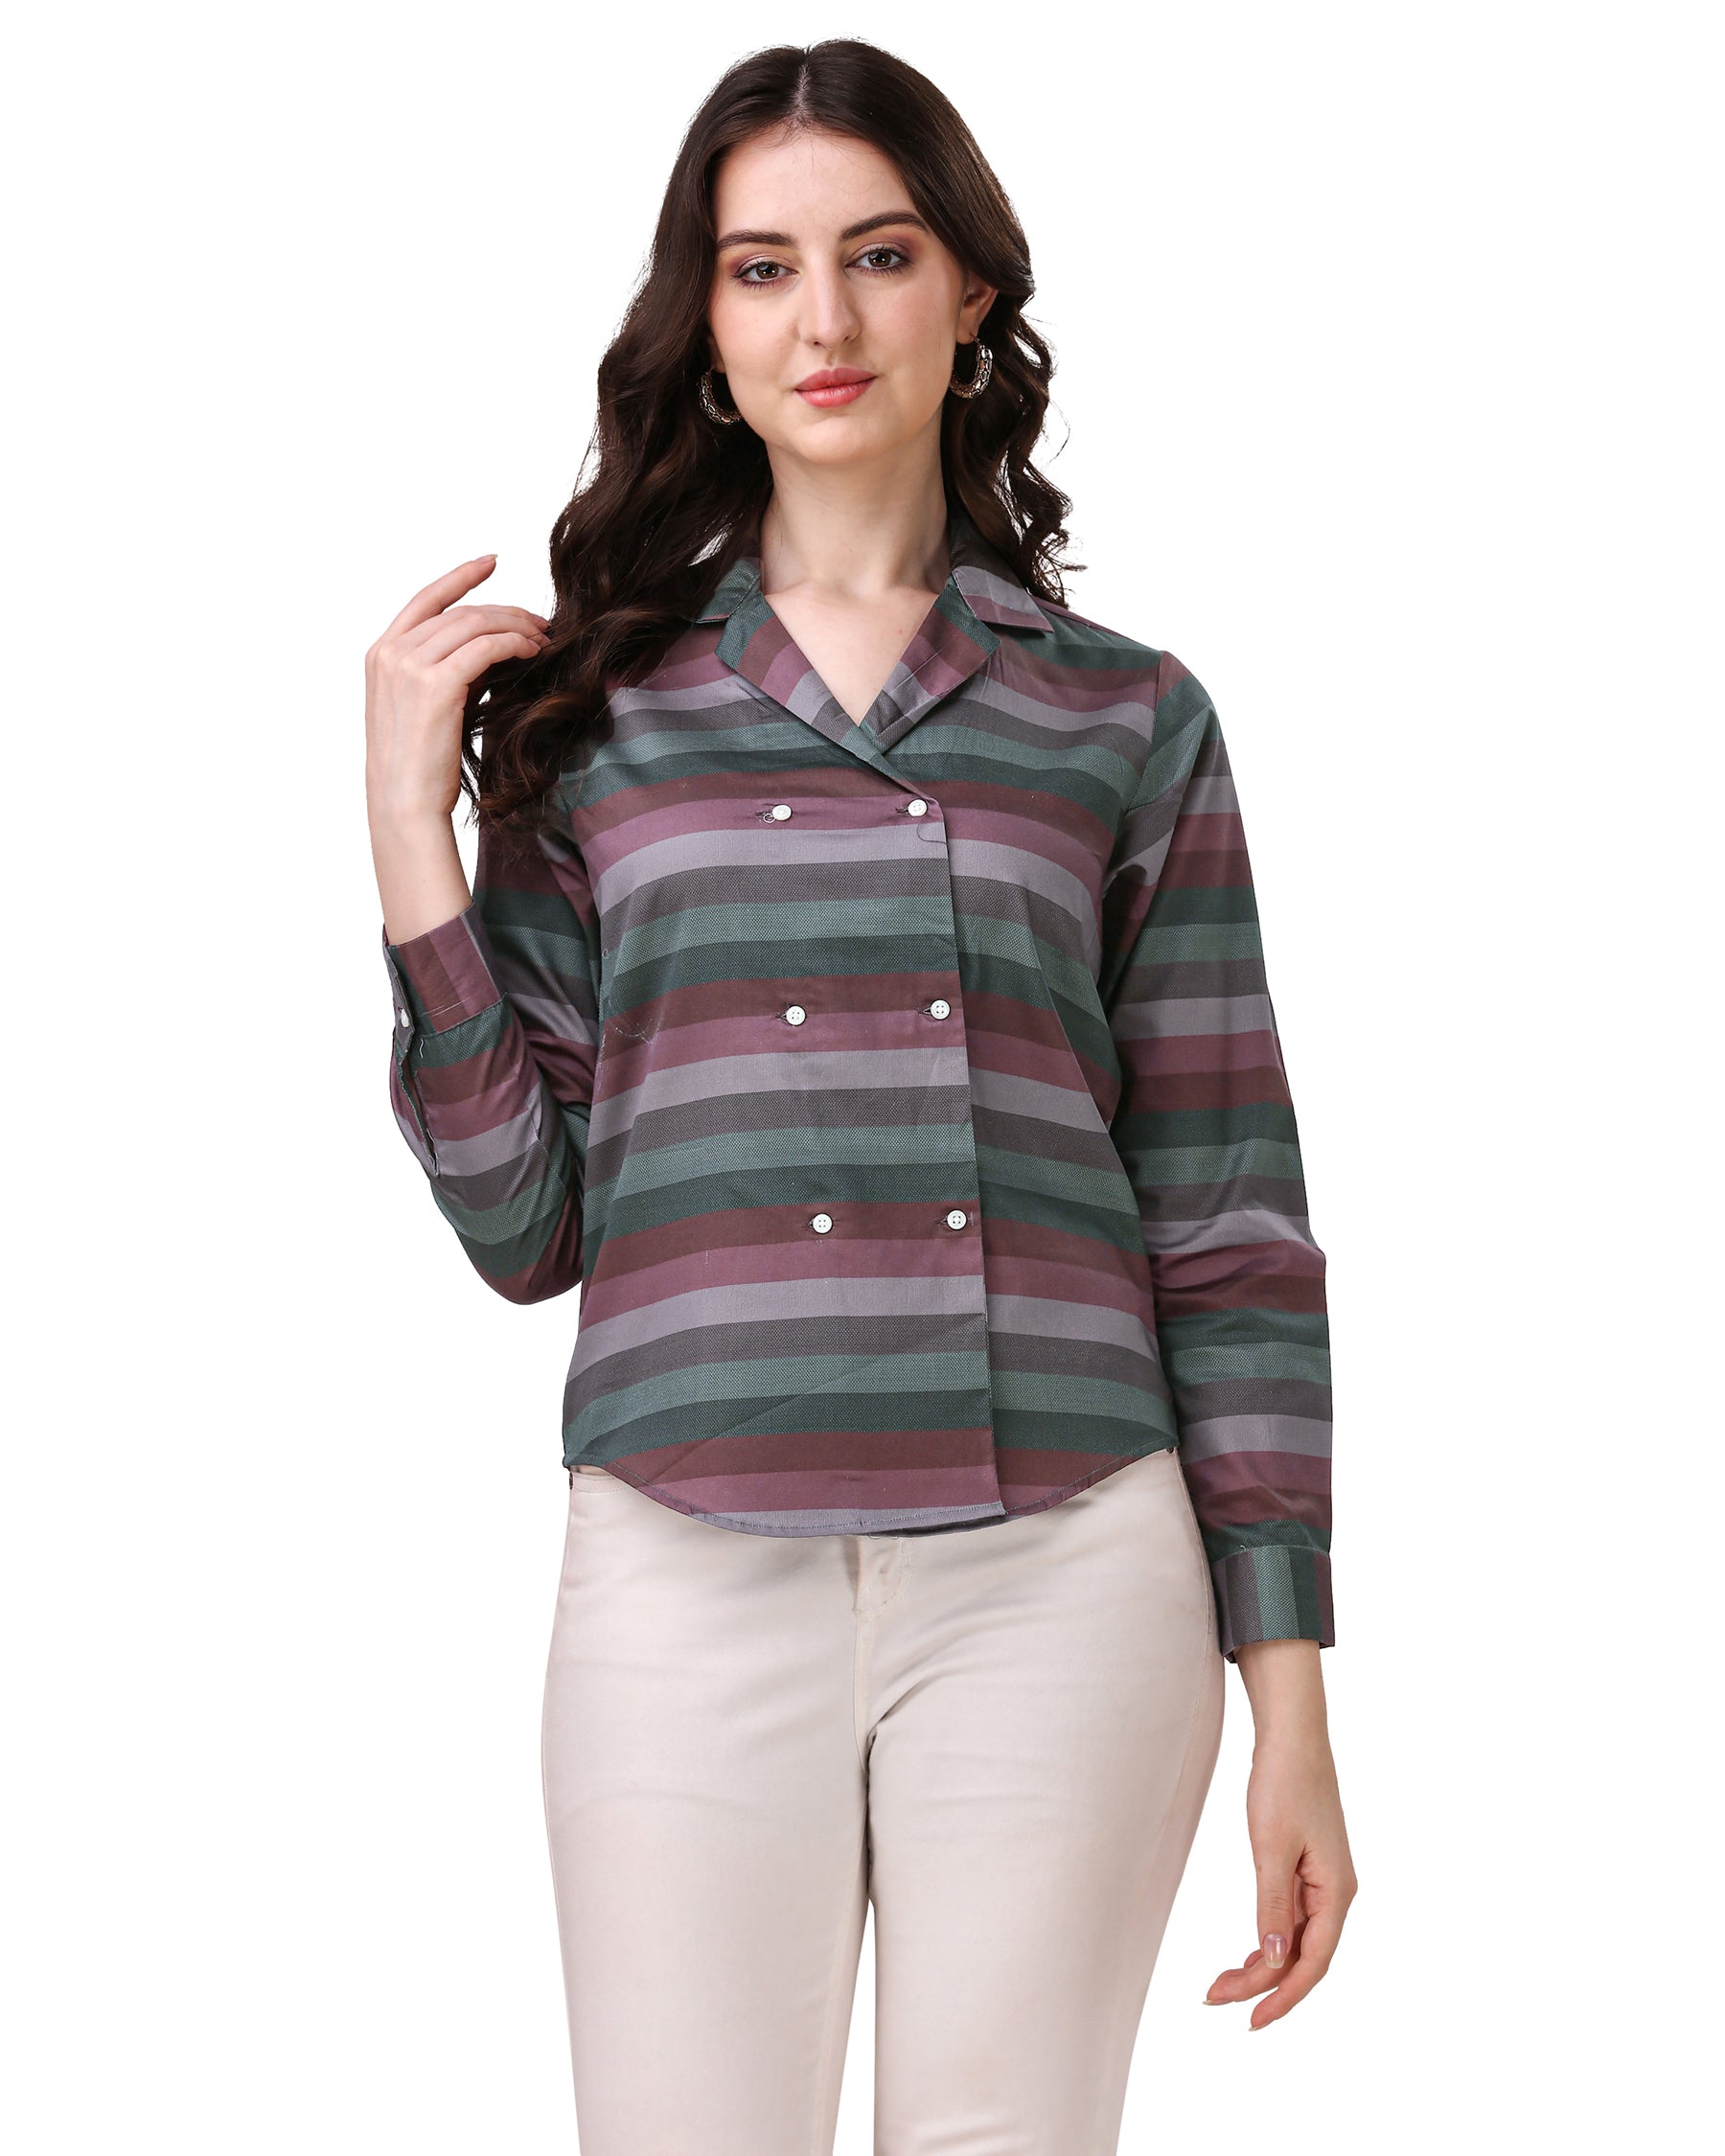 Matterhorn Brown with Multicolour Striped Super Soft Premium Cotton Women’s Shirt